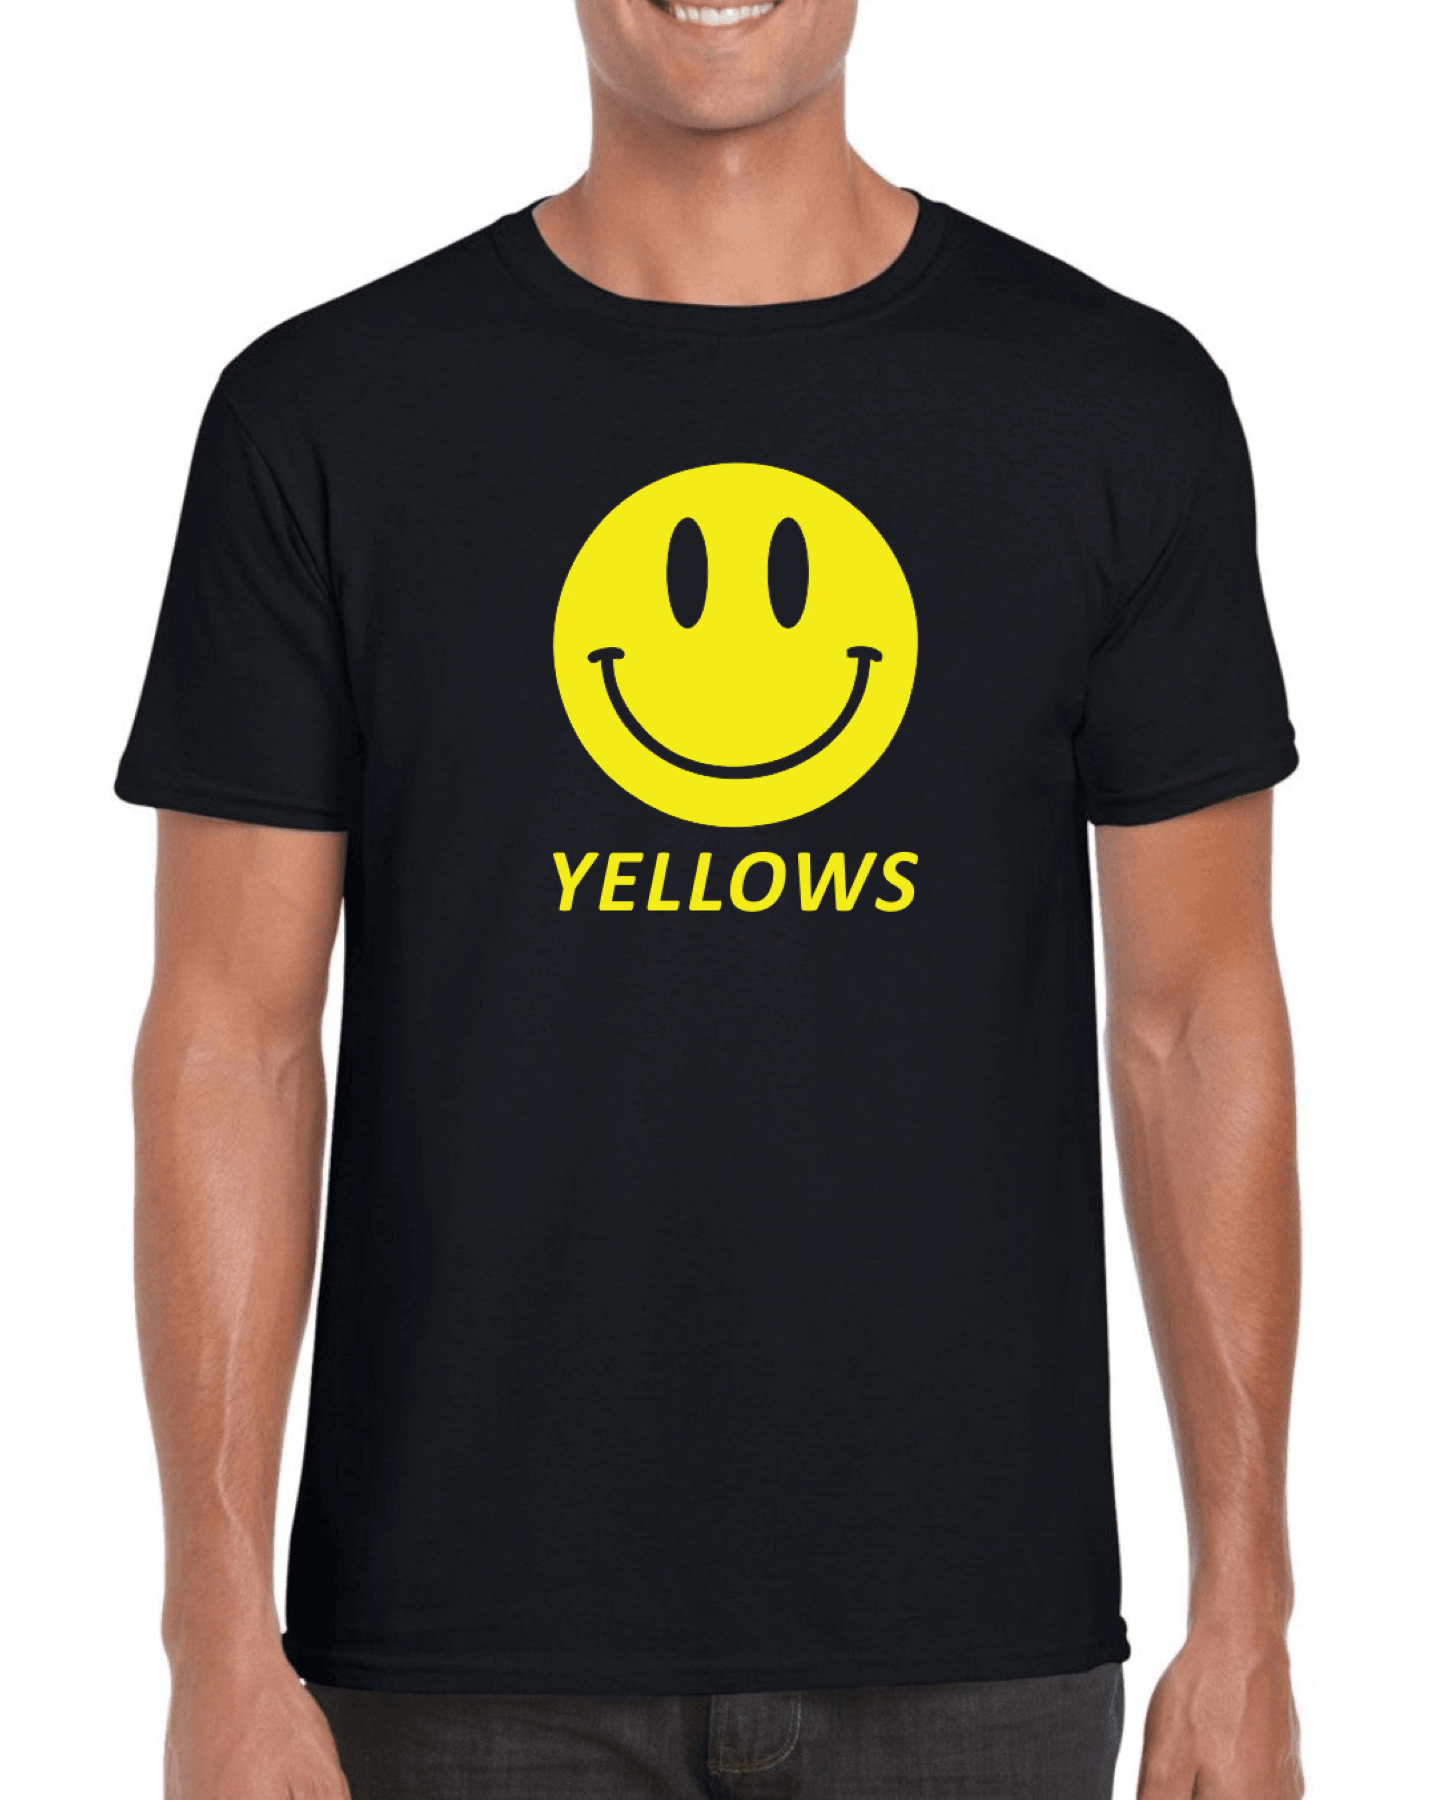 UTAS Yellows